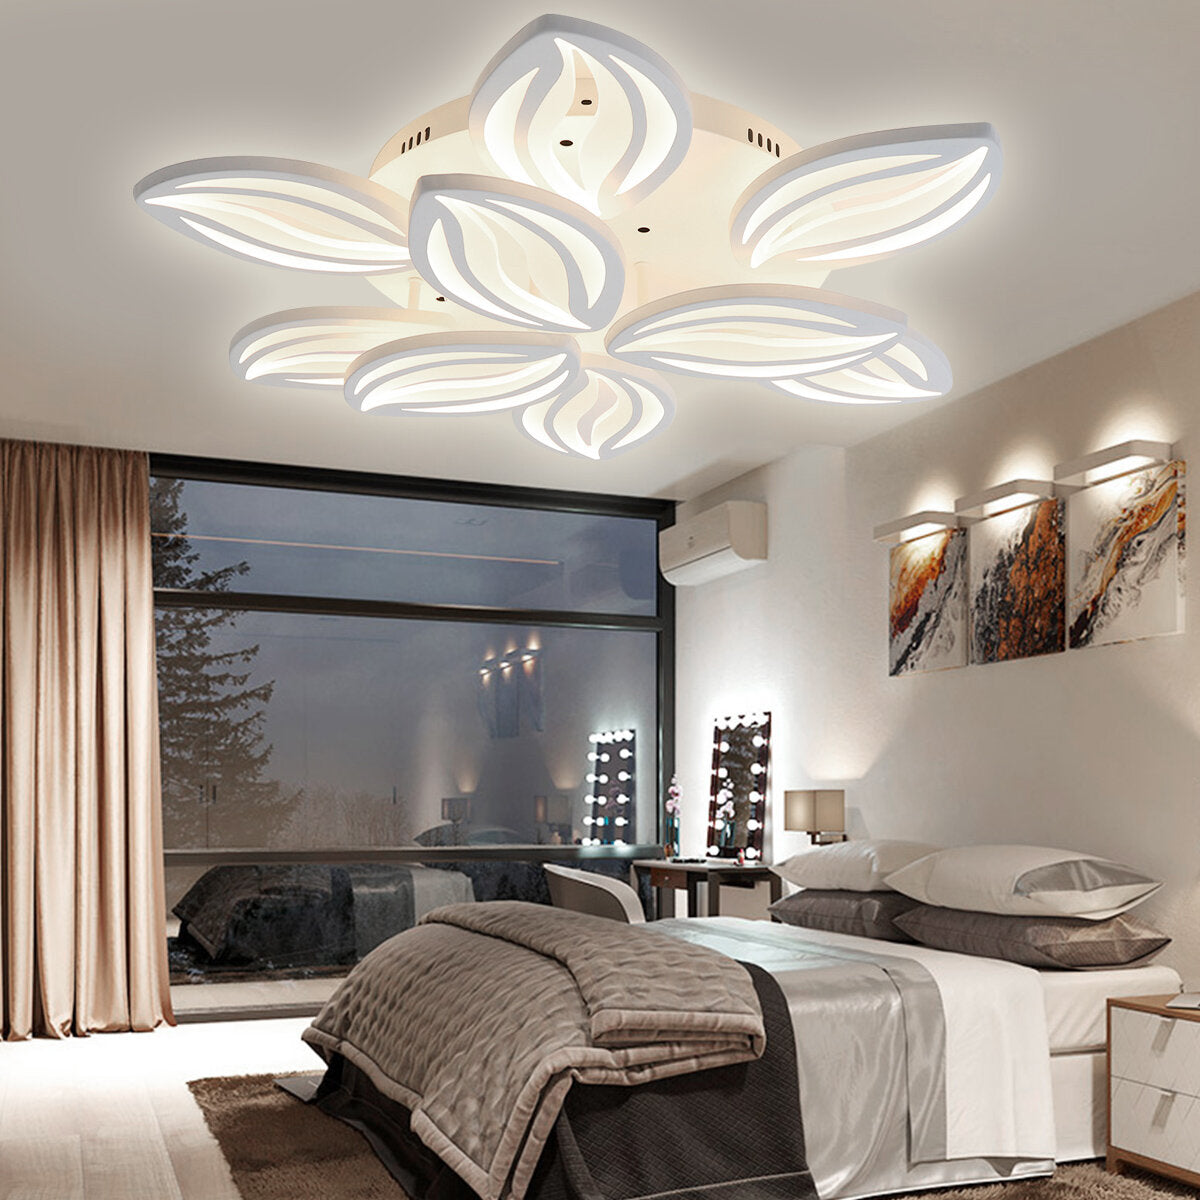 ac110-220v 10800lm 990led plafondlamp wit licht afstandsbediening slaapkamer salon